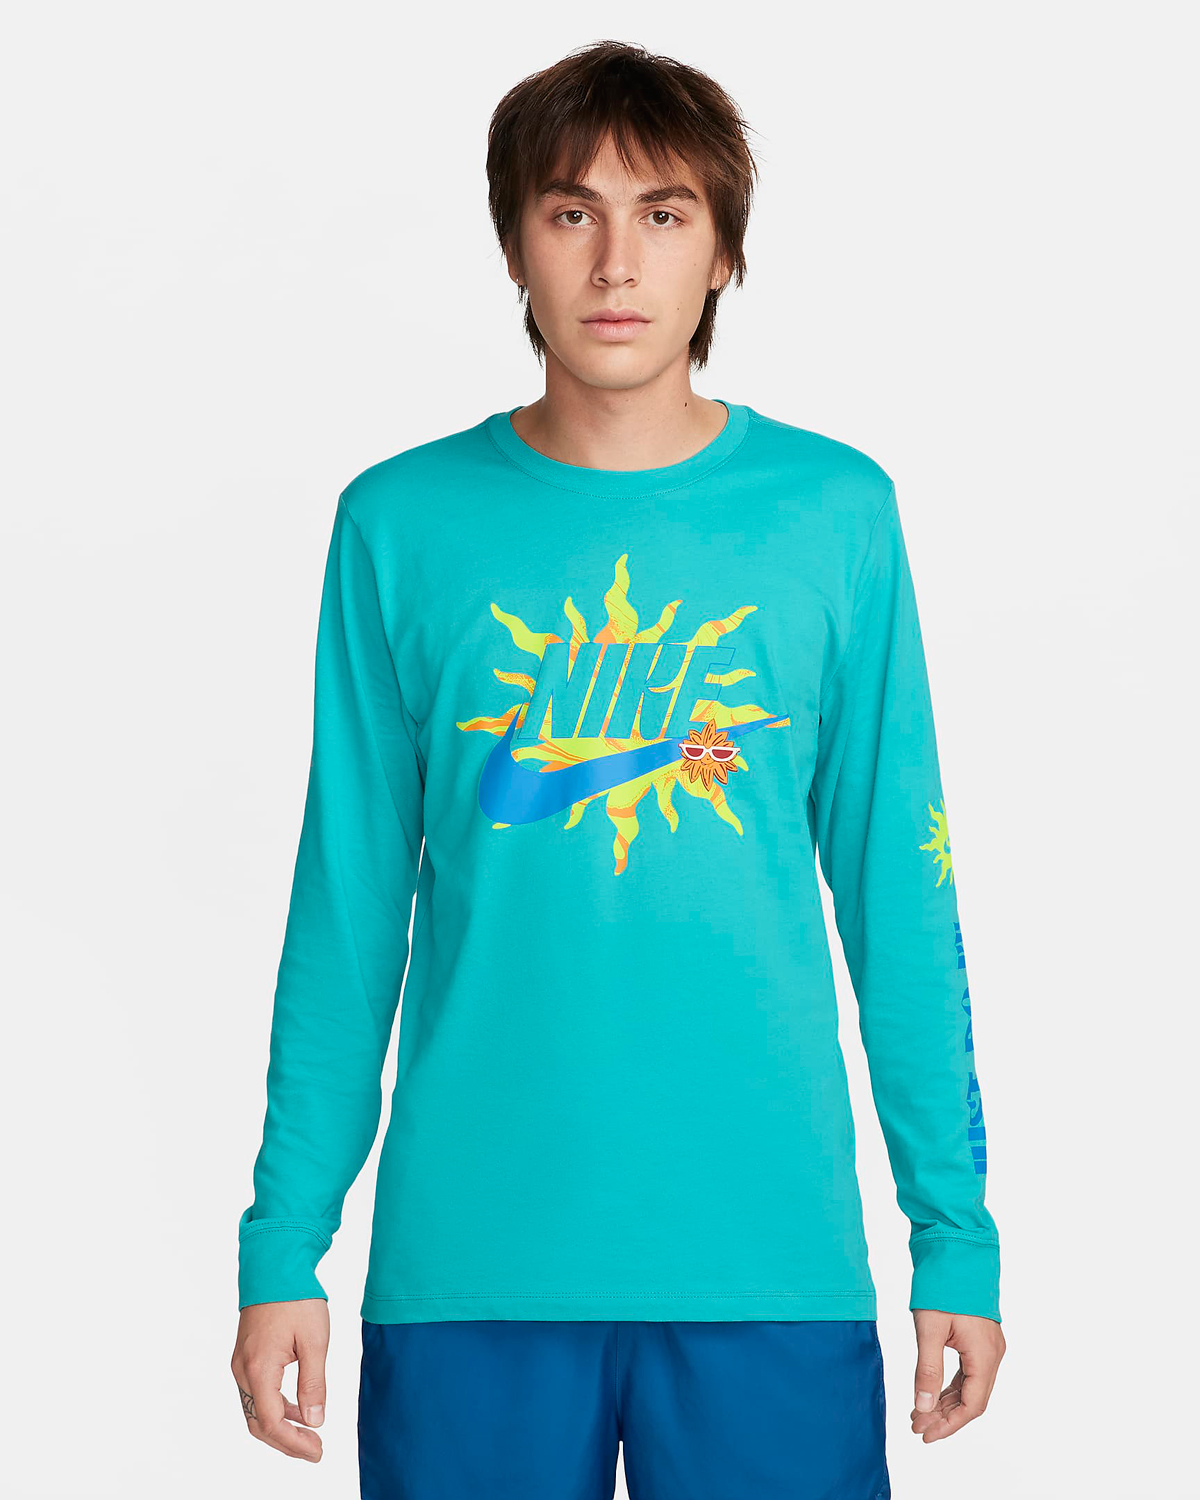 Nike Sportswear Long Sleeve T Shirt Dusty Cactus 1